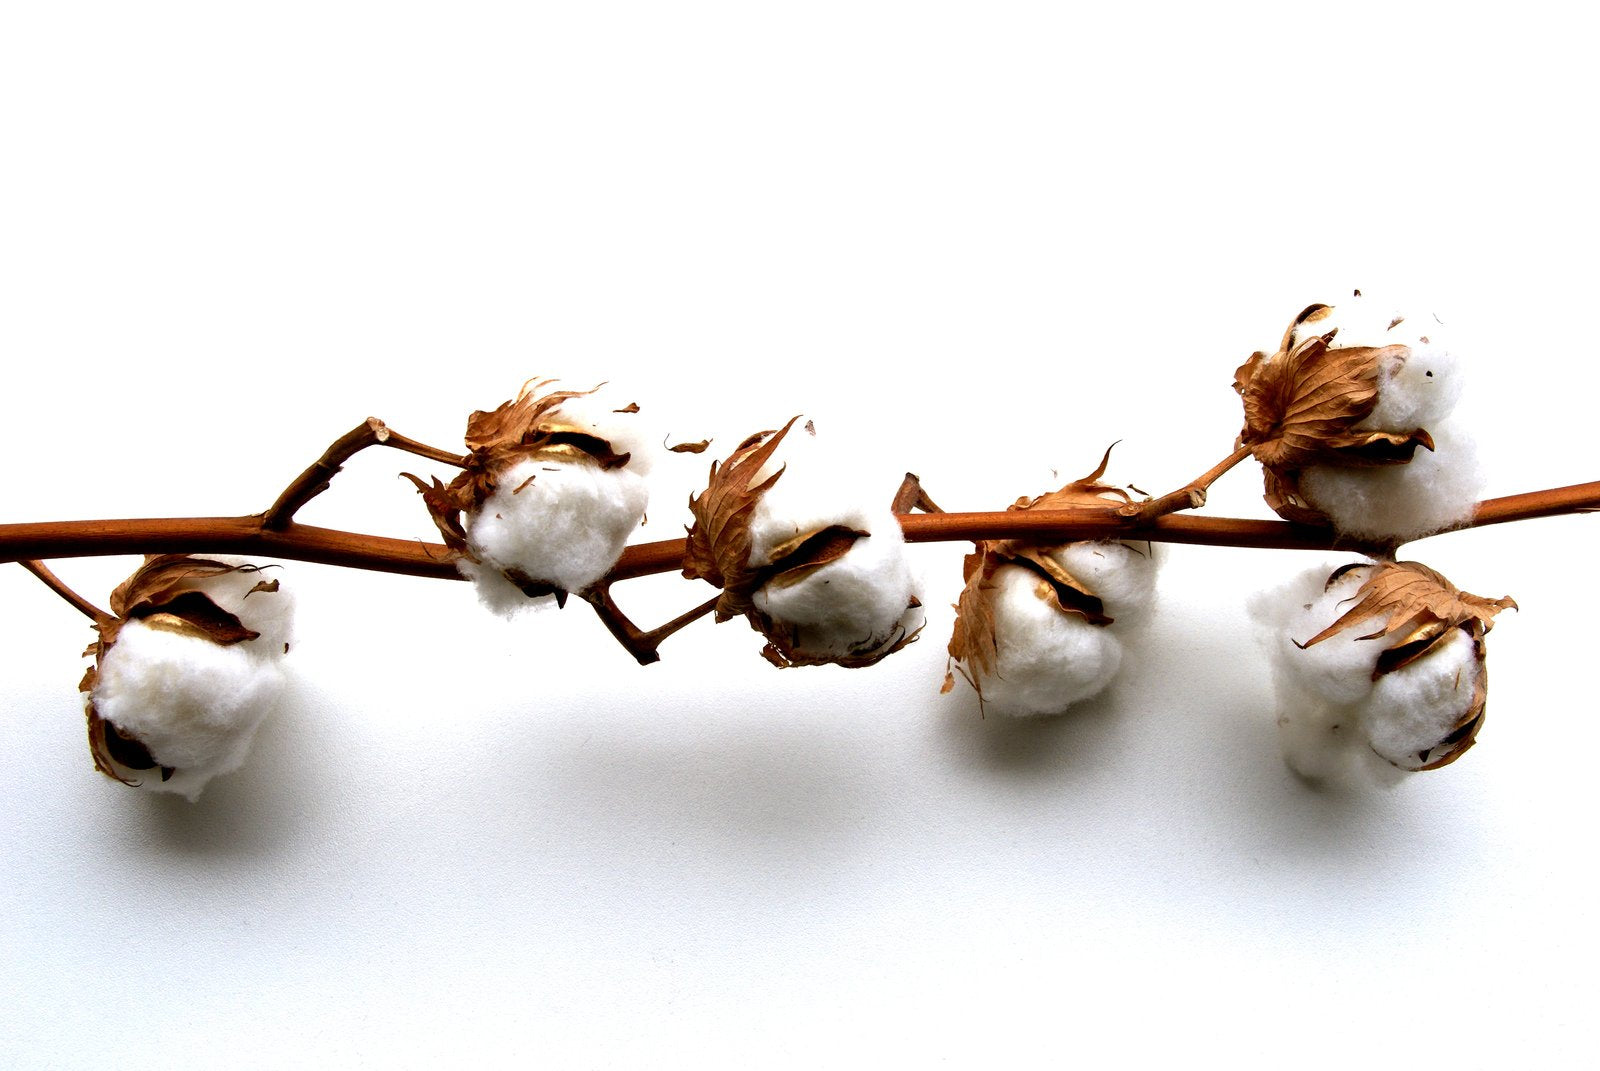 Supima Cotton  World Finest Cottons